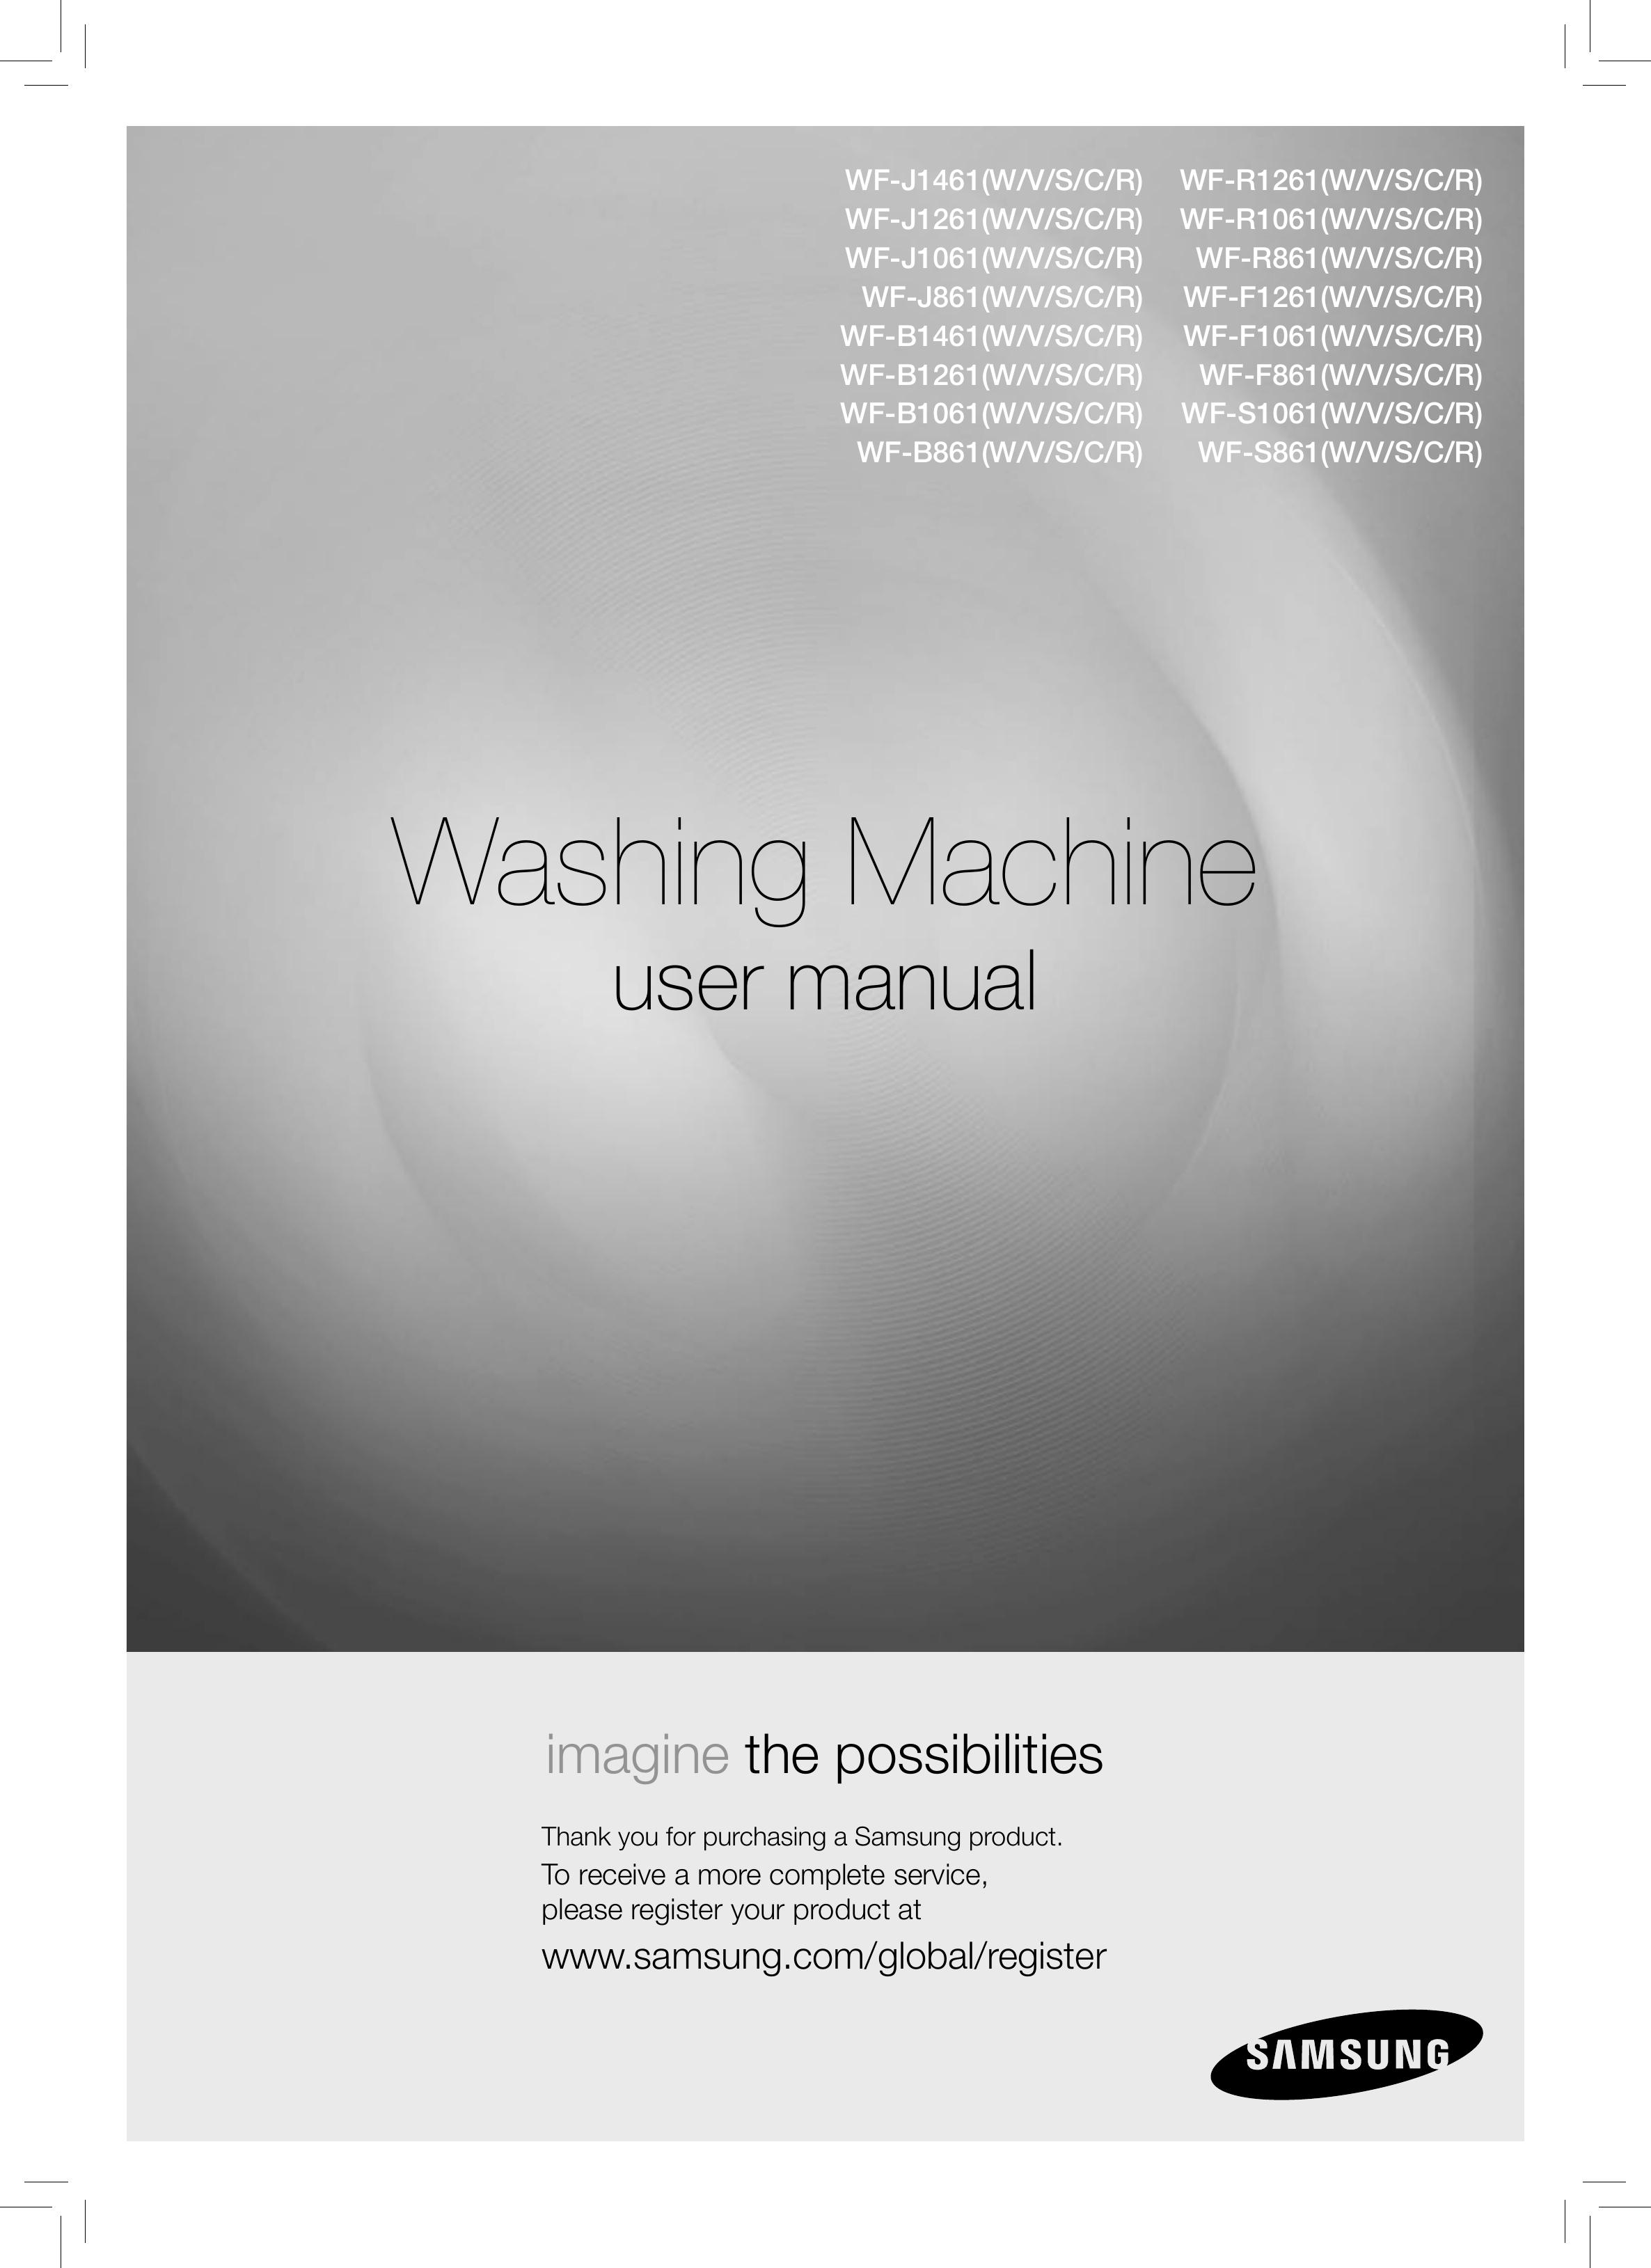 Samsung WF-B861 Washer/Dryer User Manual